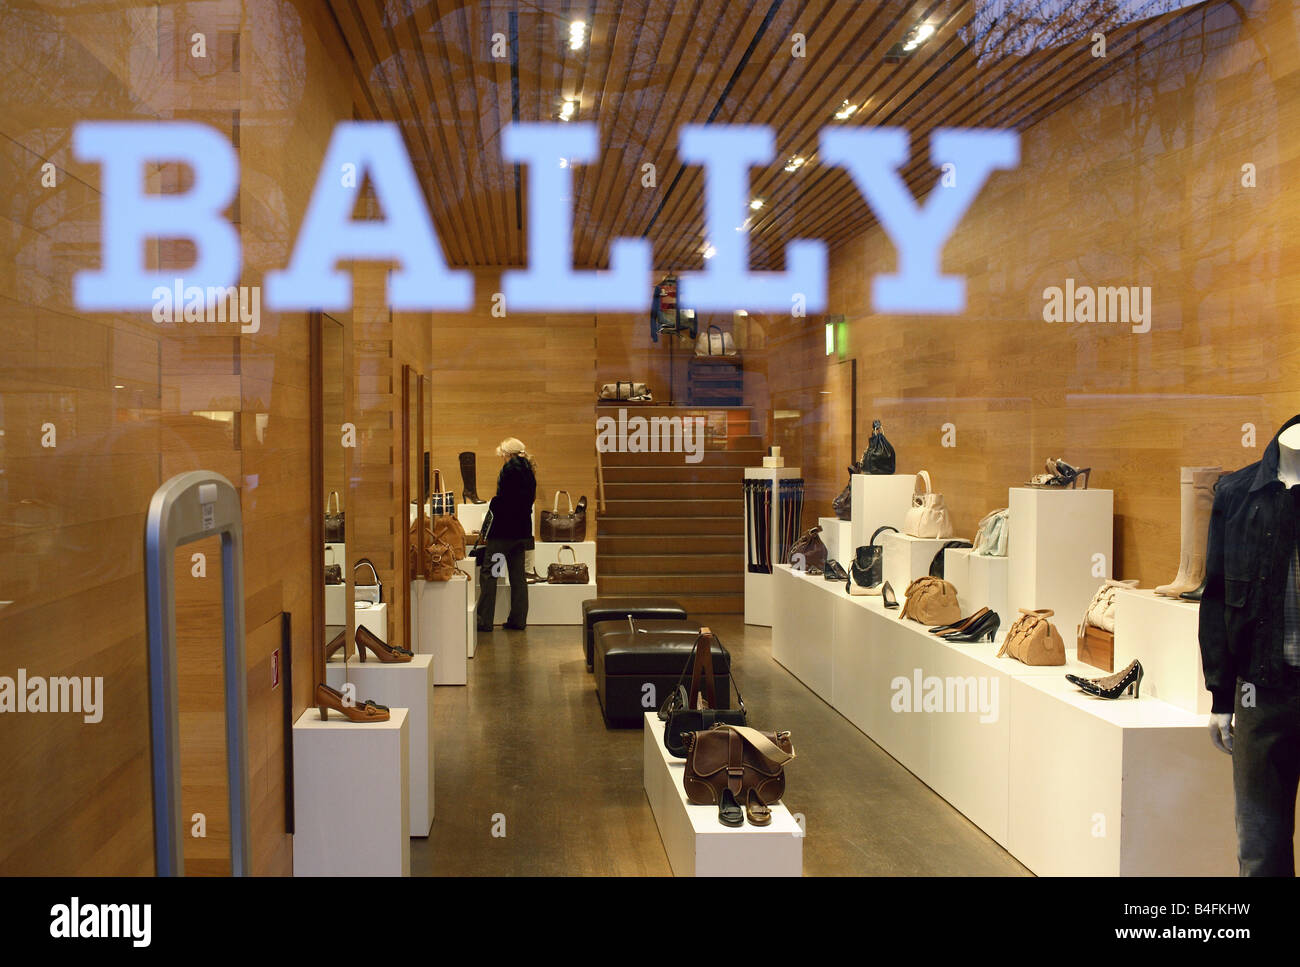 Bally store in Berlin, Germany Stock Photo - Alamy